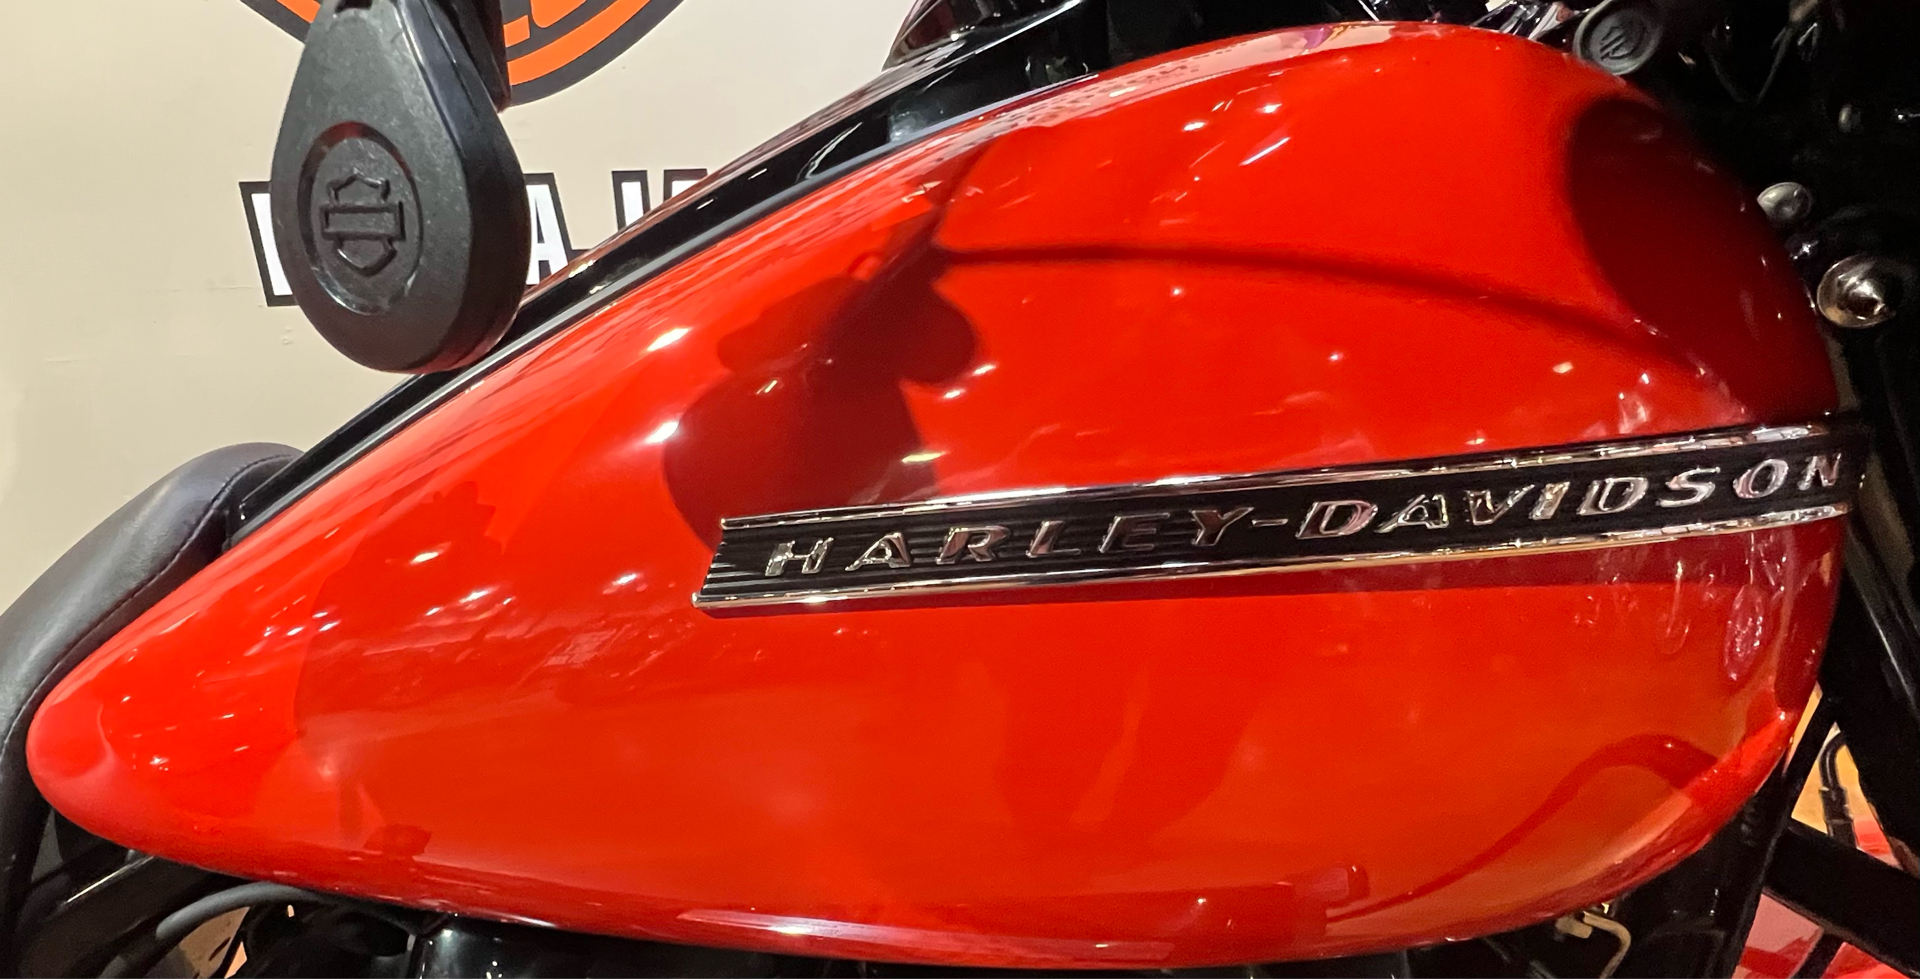 2020 Harley-Davidson Street Glide® Special in Houma, Louisiana - Photo 16